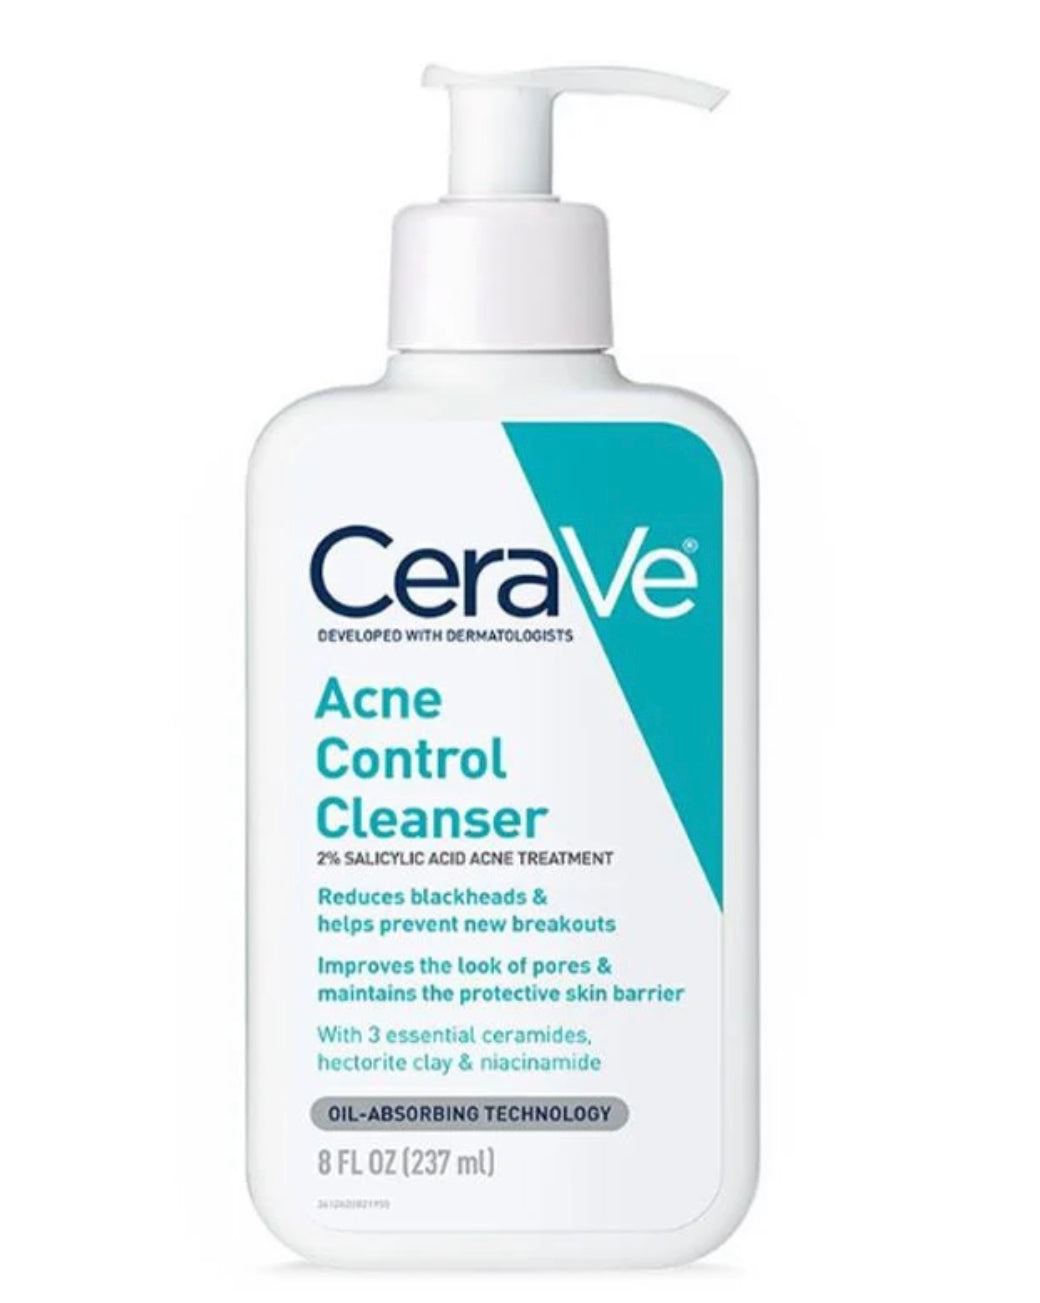 Cerave Acne Control Cleanser 237ml.